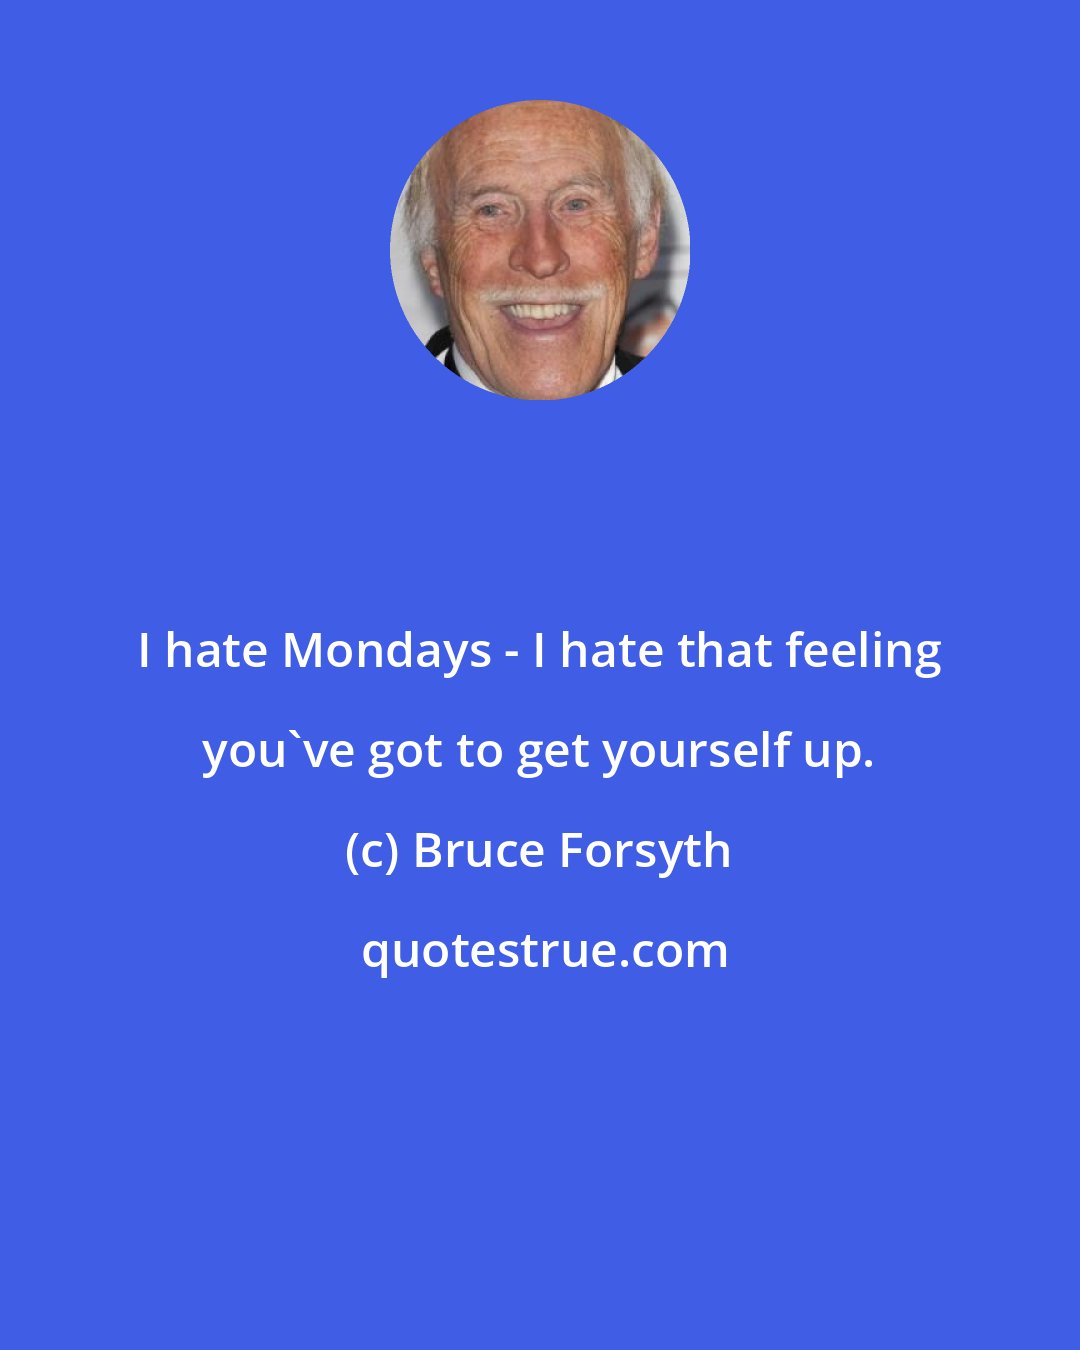 Bruce Forsyth: I hate Mondays - I hate that feeling you've got to get yourself up.